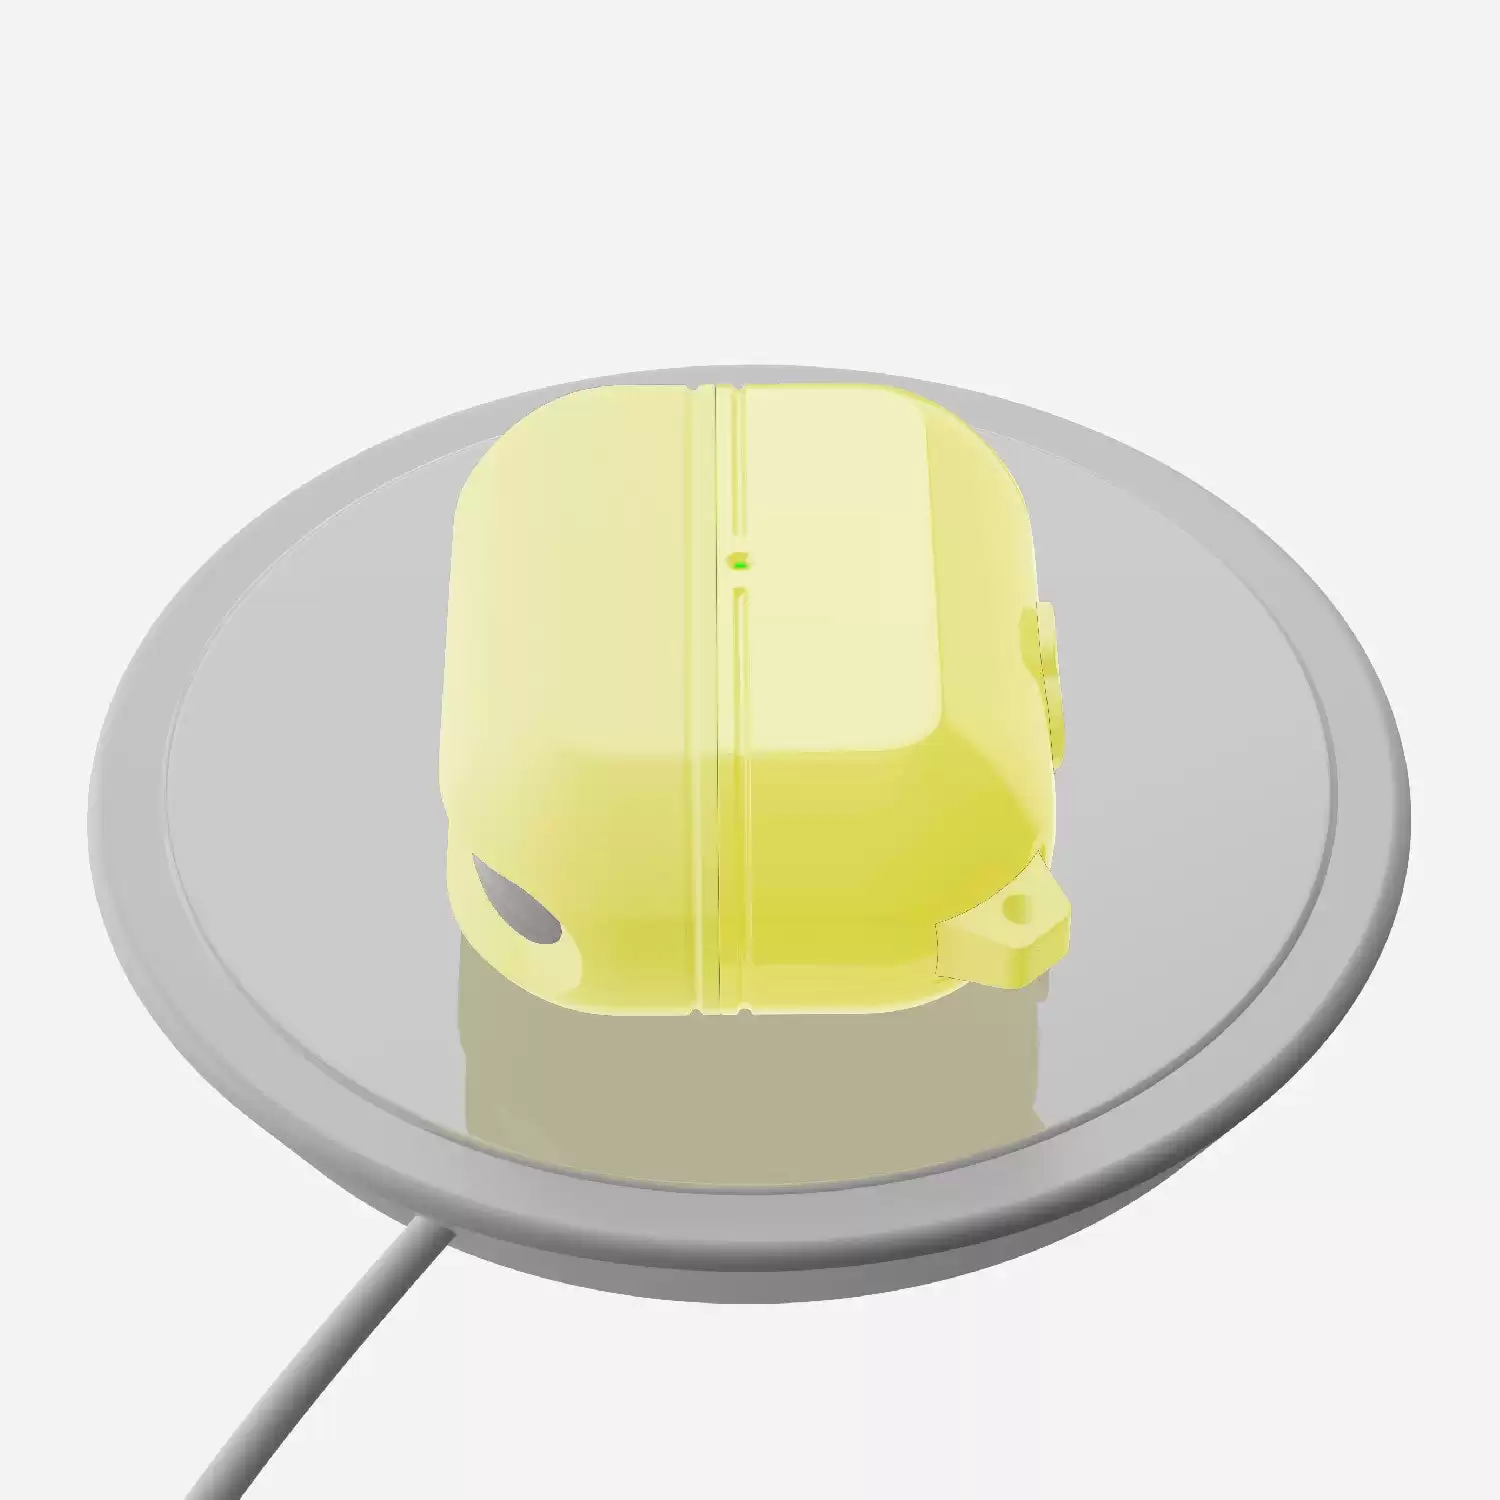 Apple-AirPods-pro-case-raptic-journey-yellow-488211-5_1800x1800